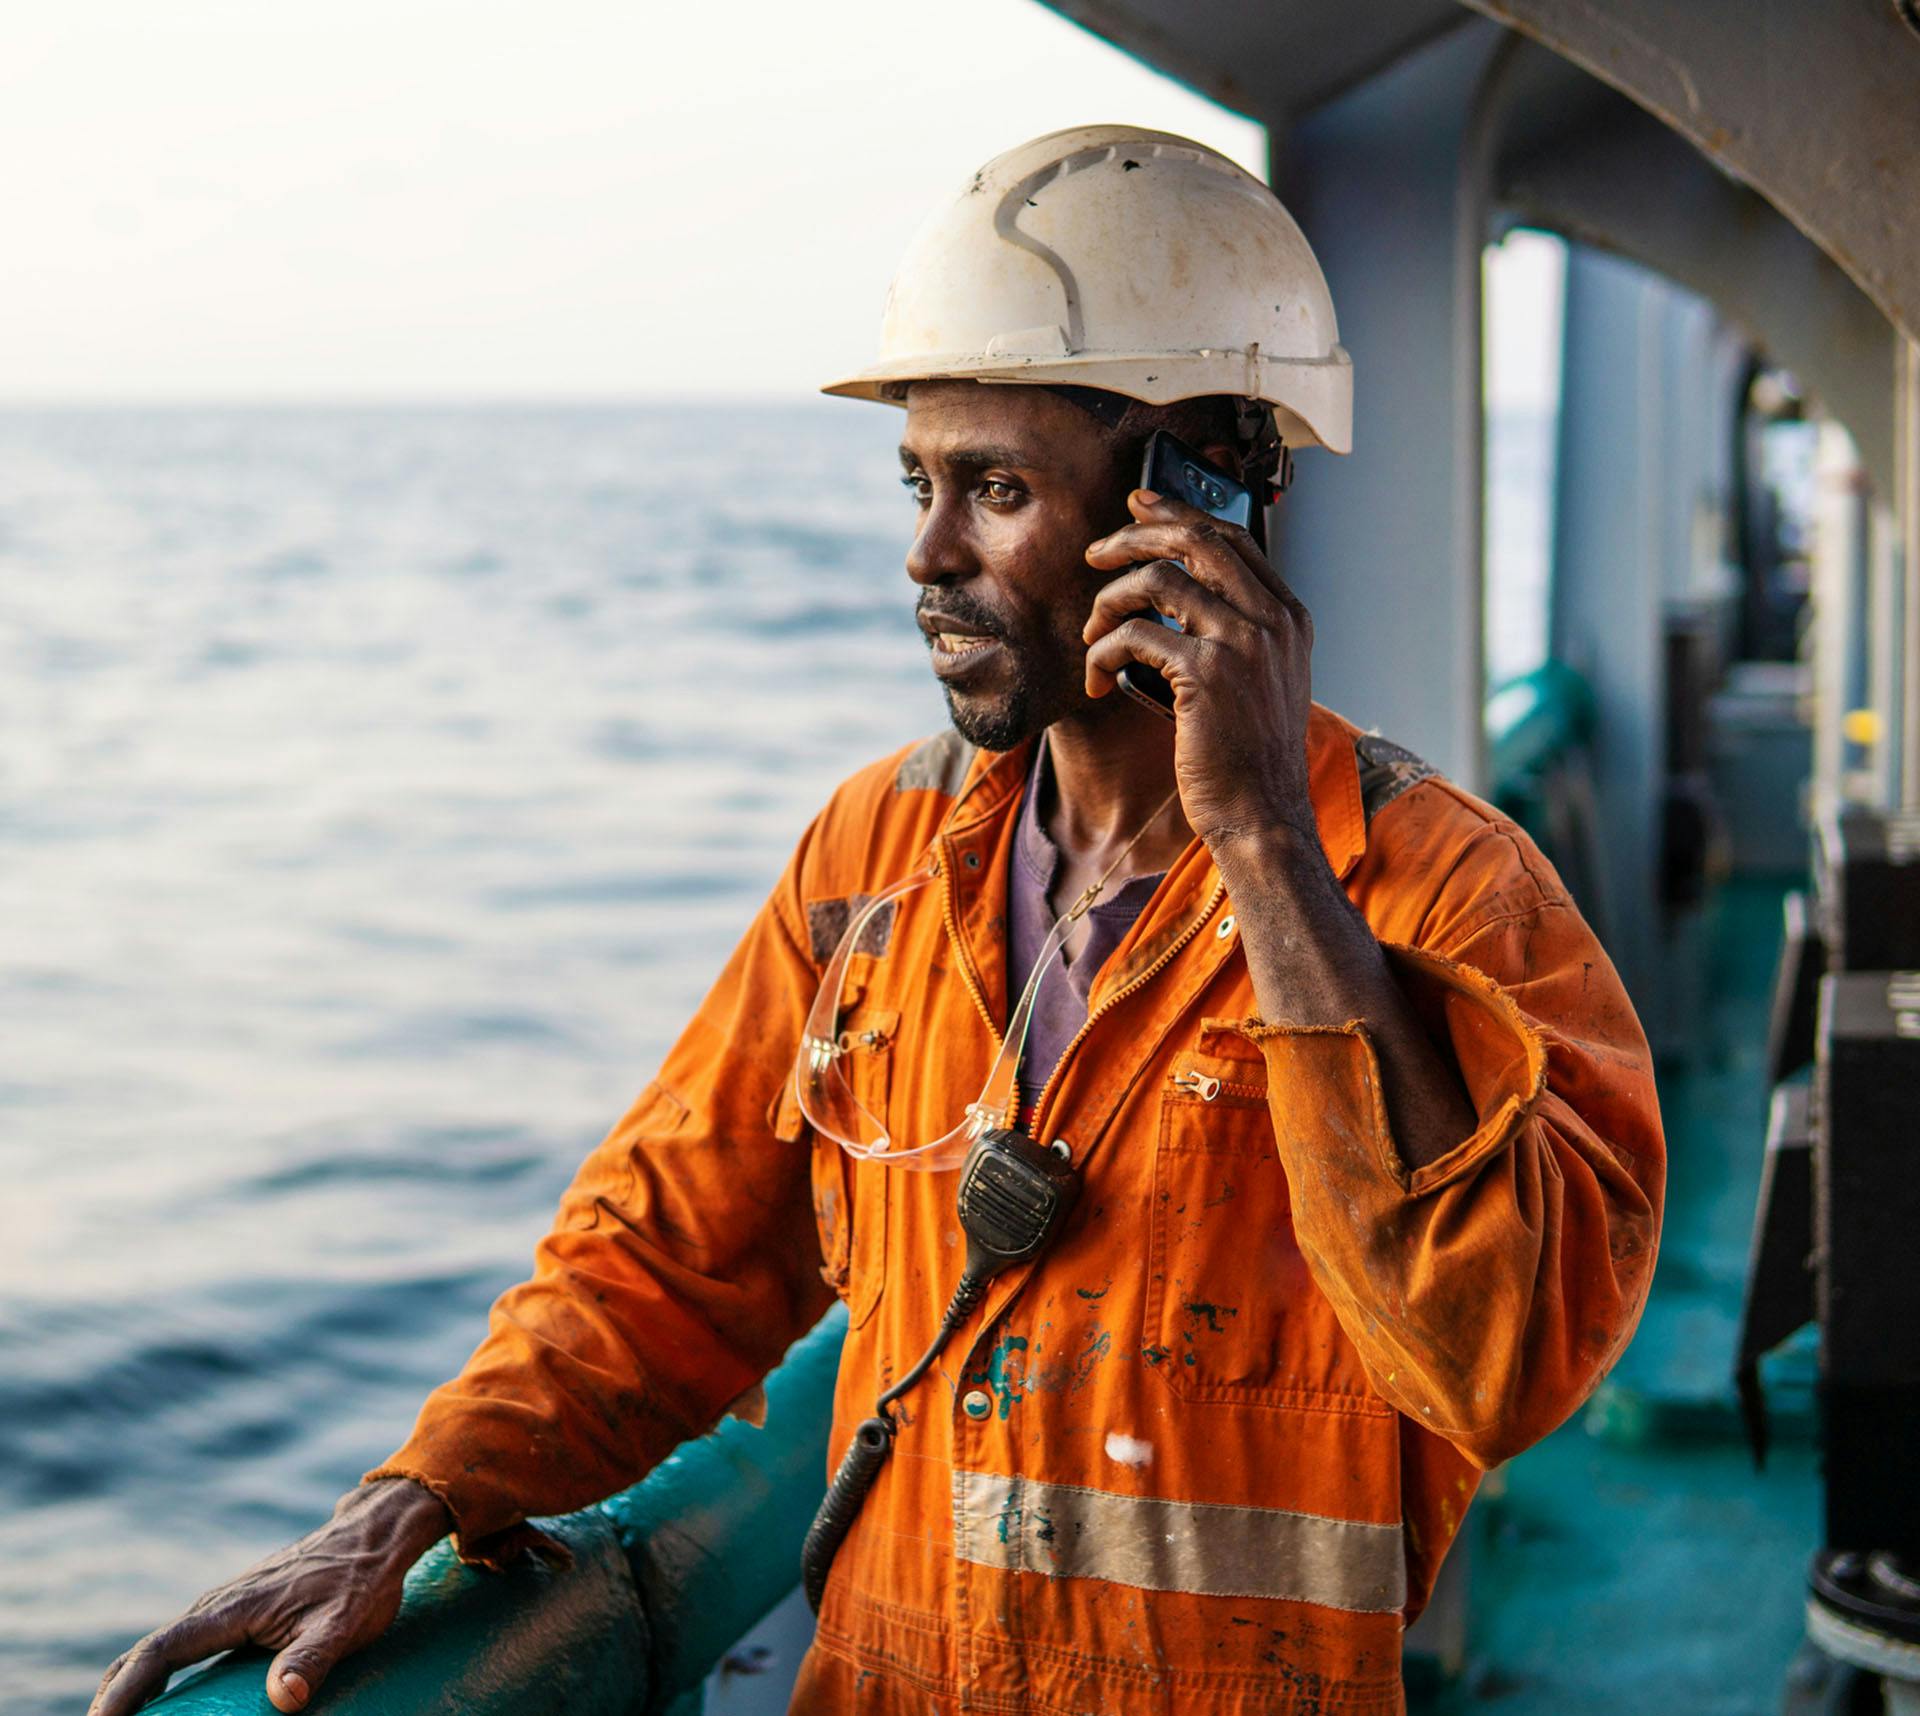 Ship crewmember on a phone call